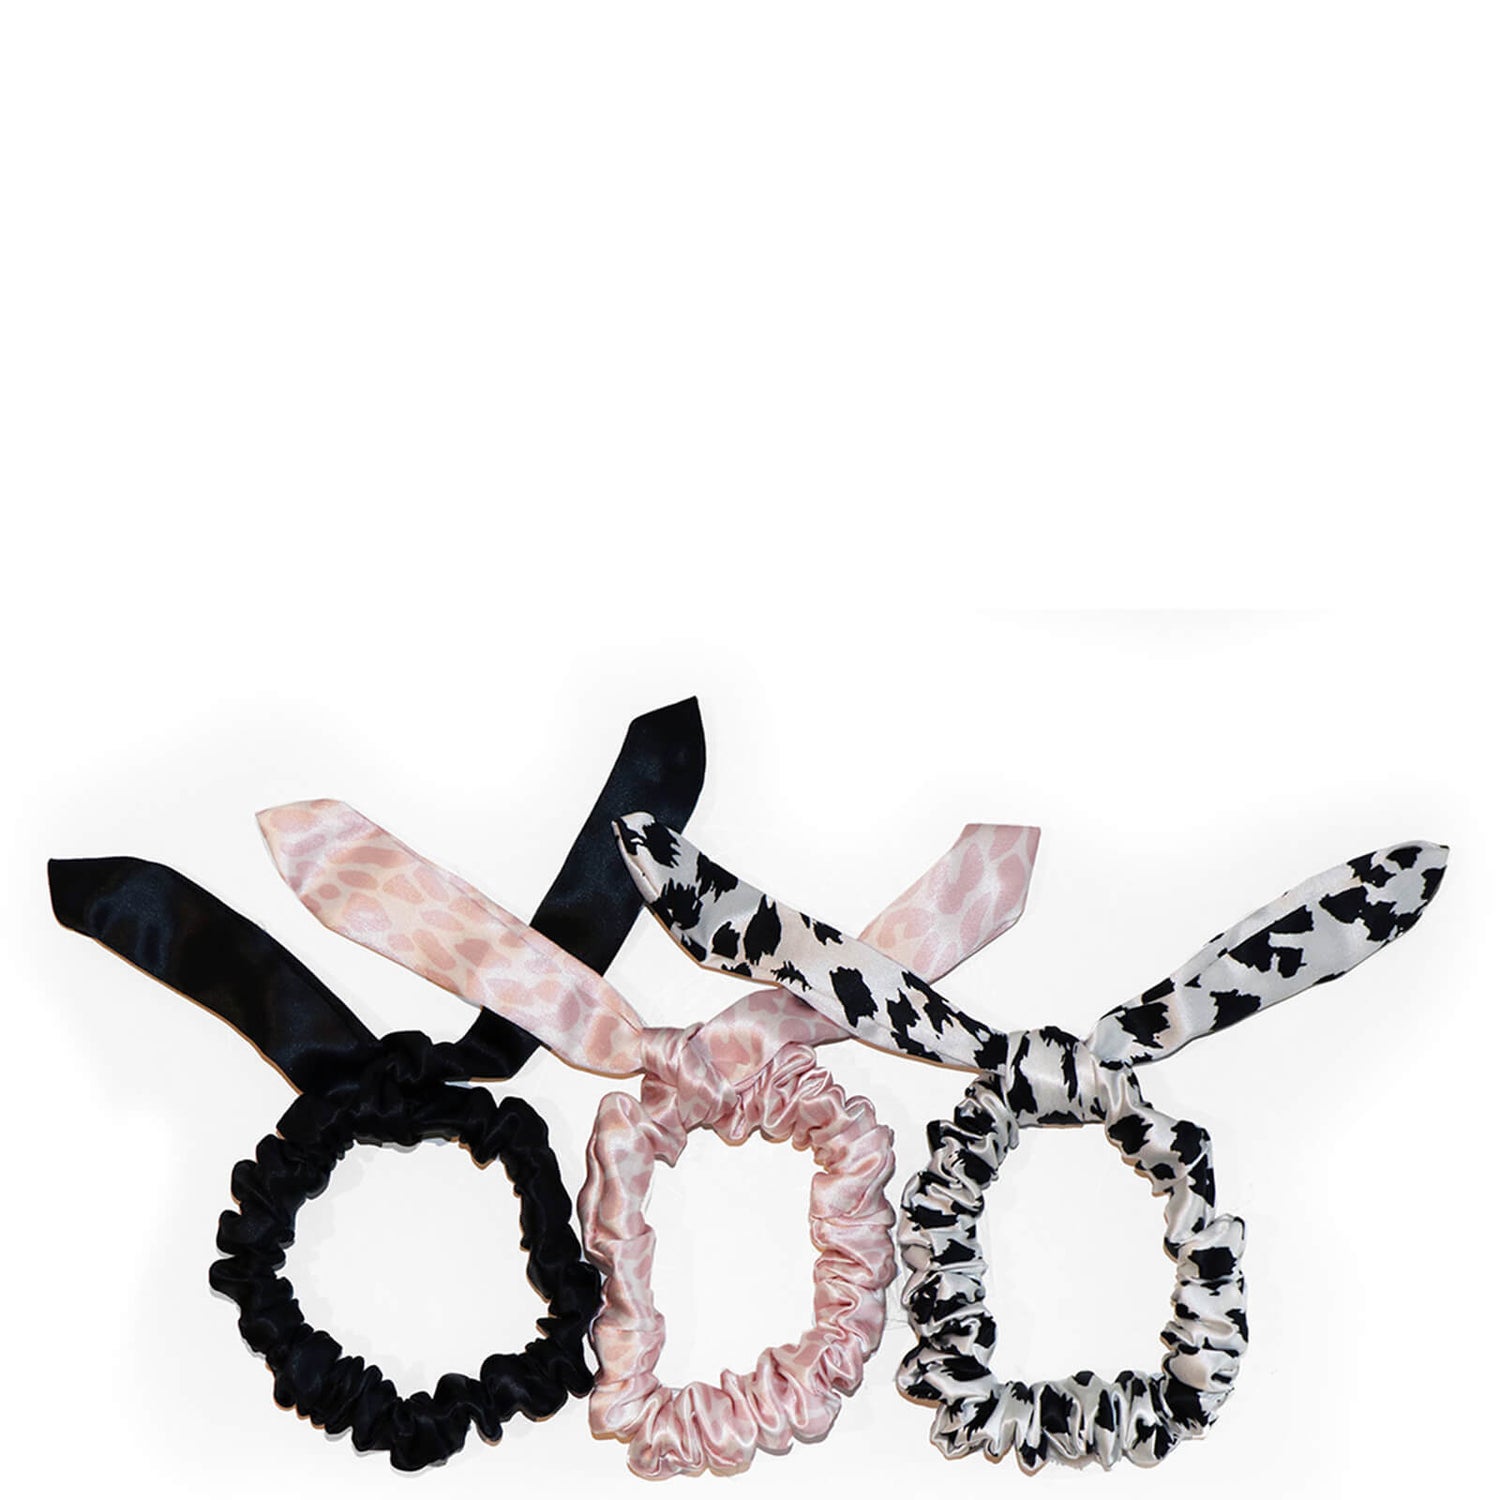 Slip Silk Bunny Scrunchies - Black/Pink Snow Leopard/White Leopard (Pack of 3)